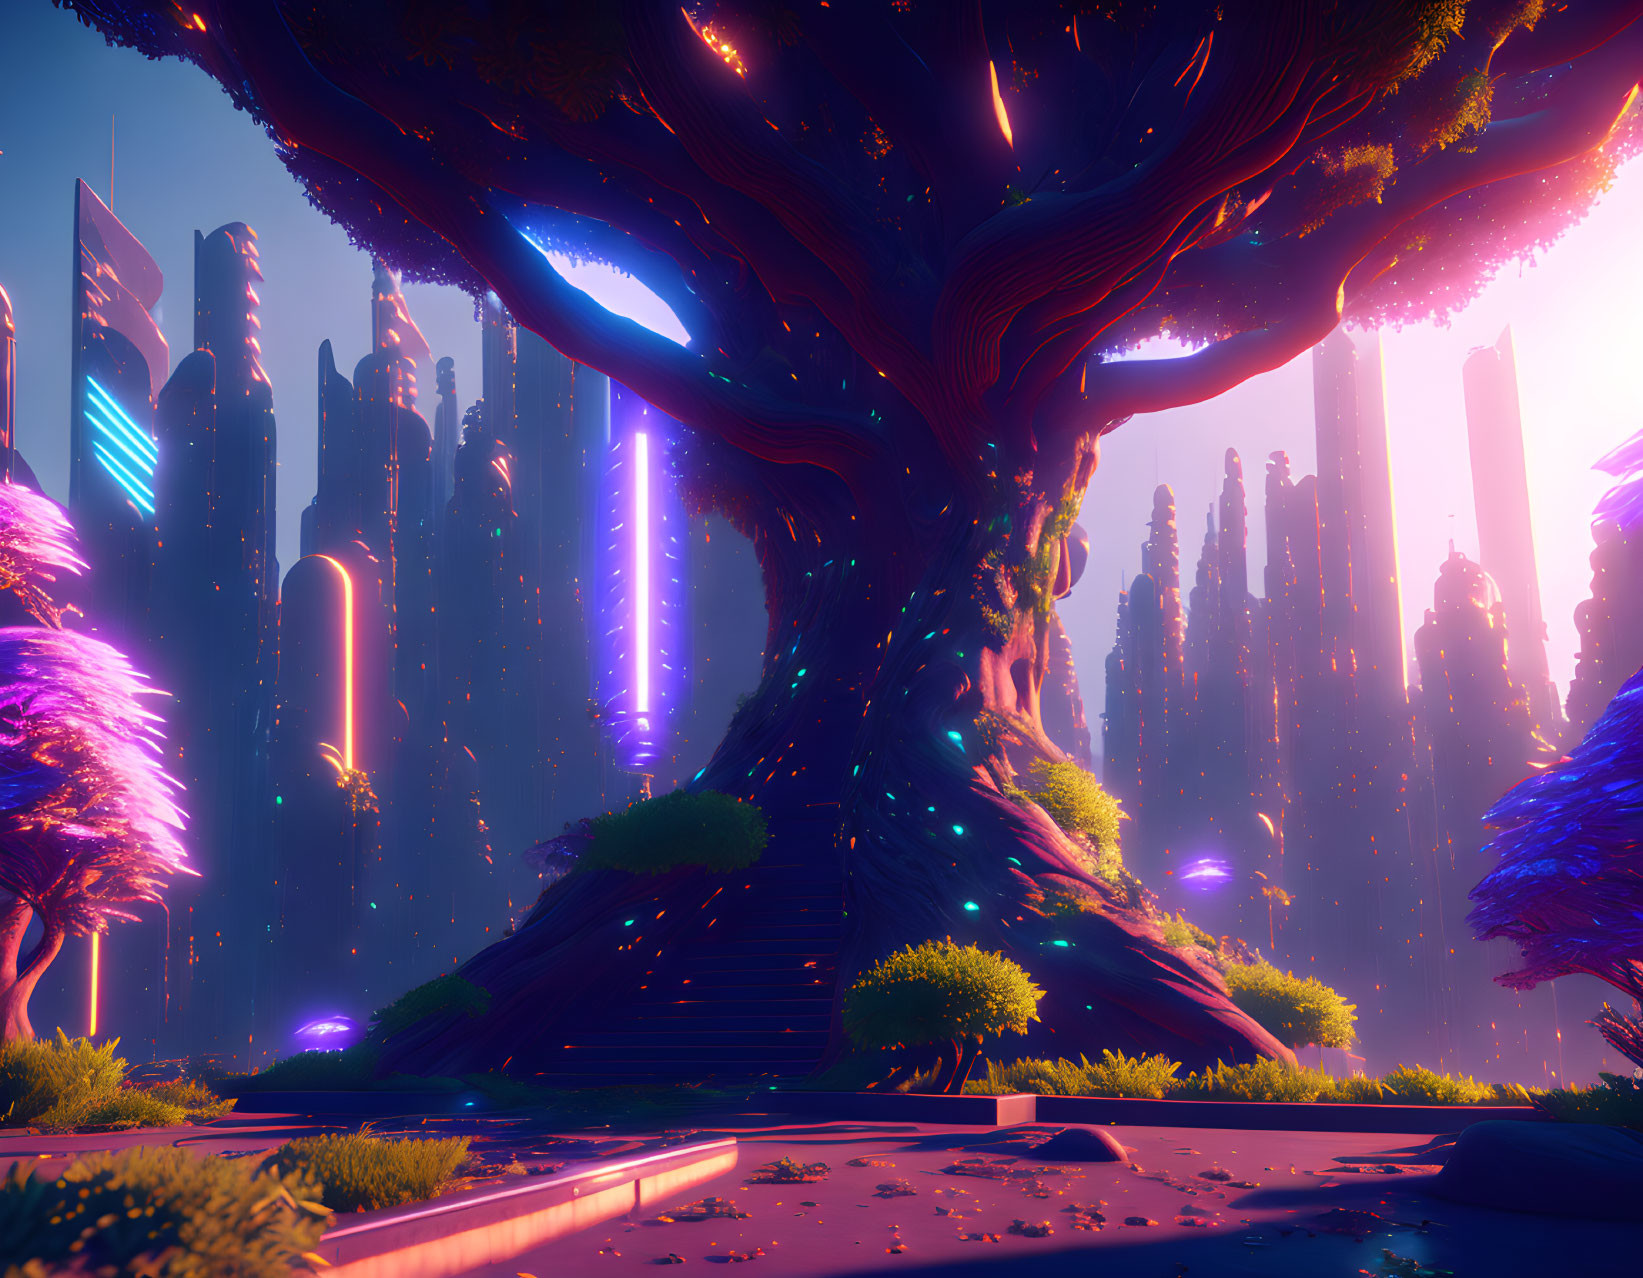 Futuristic landscape with giant tree, neon skyscrapers, and purple foliage